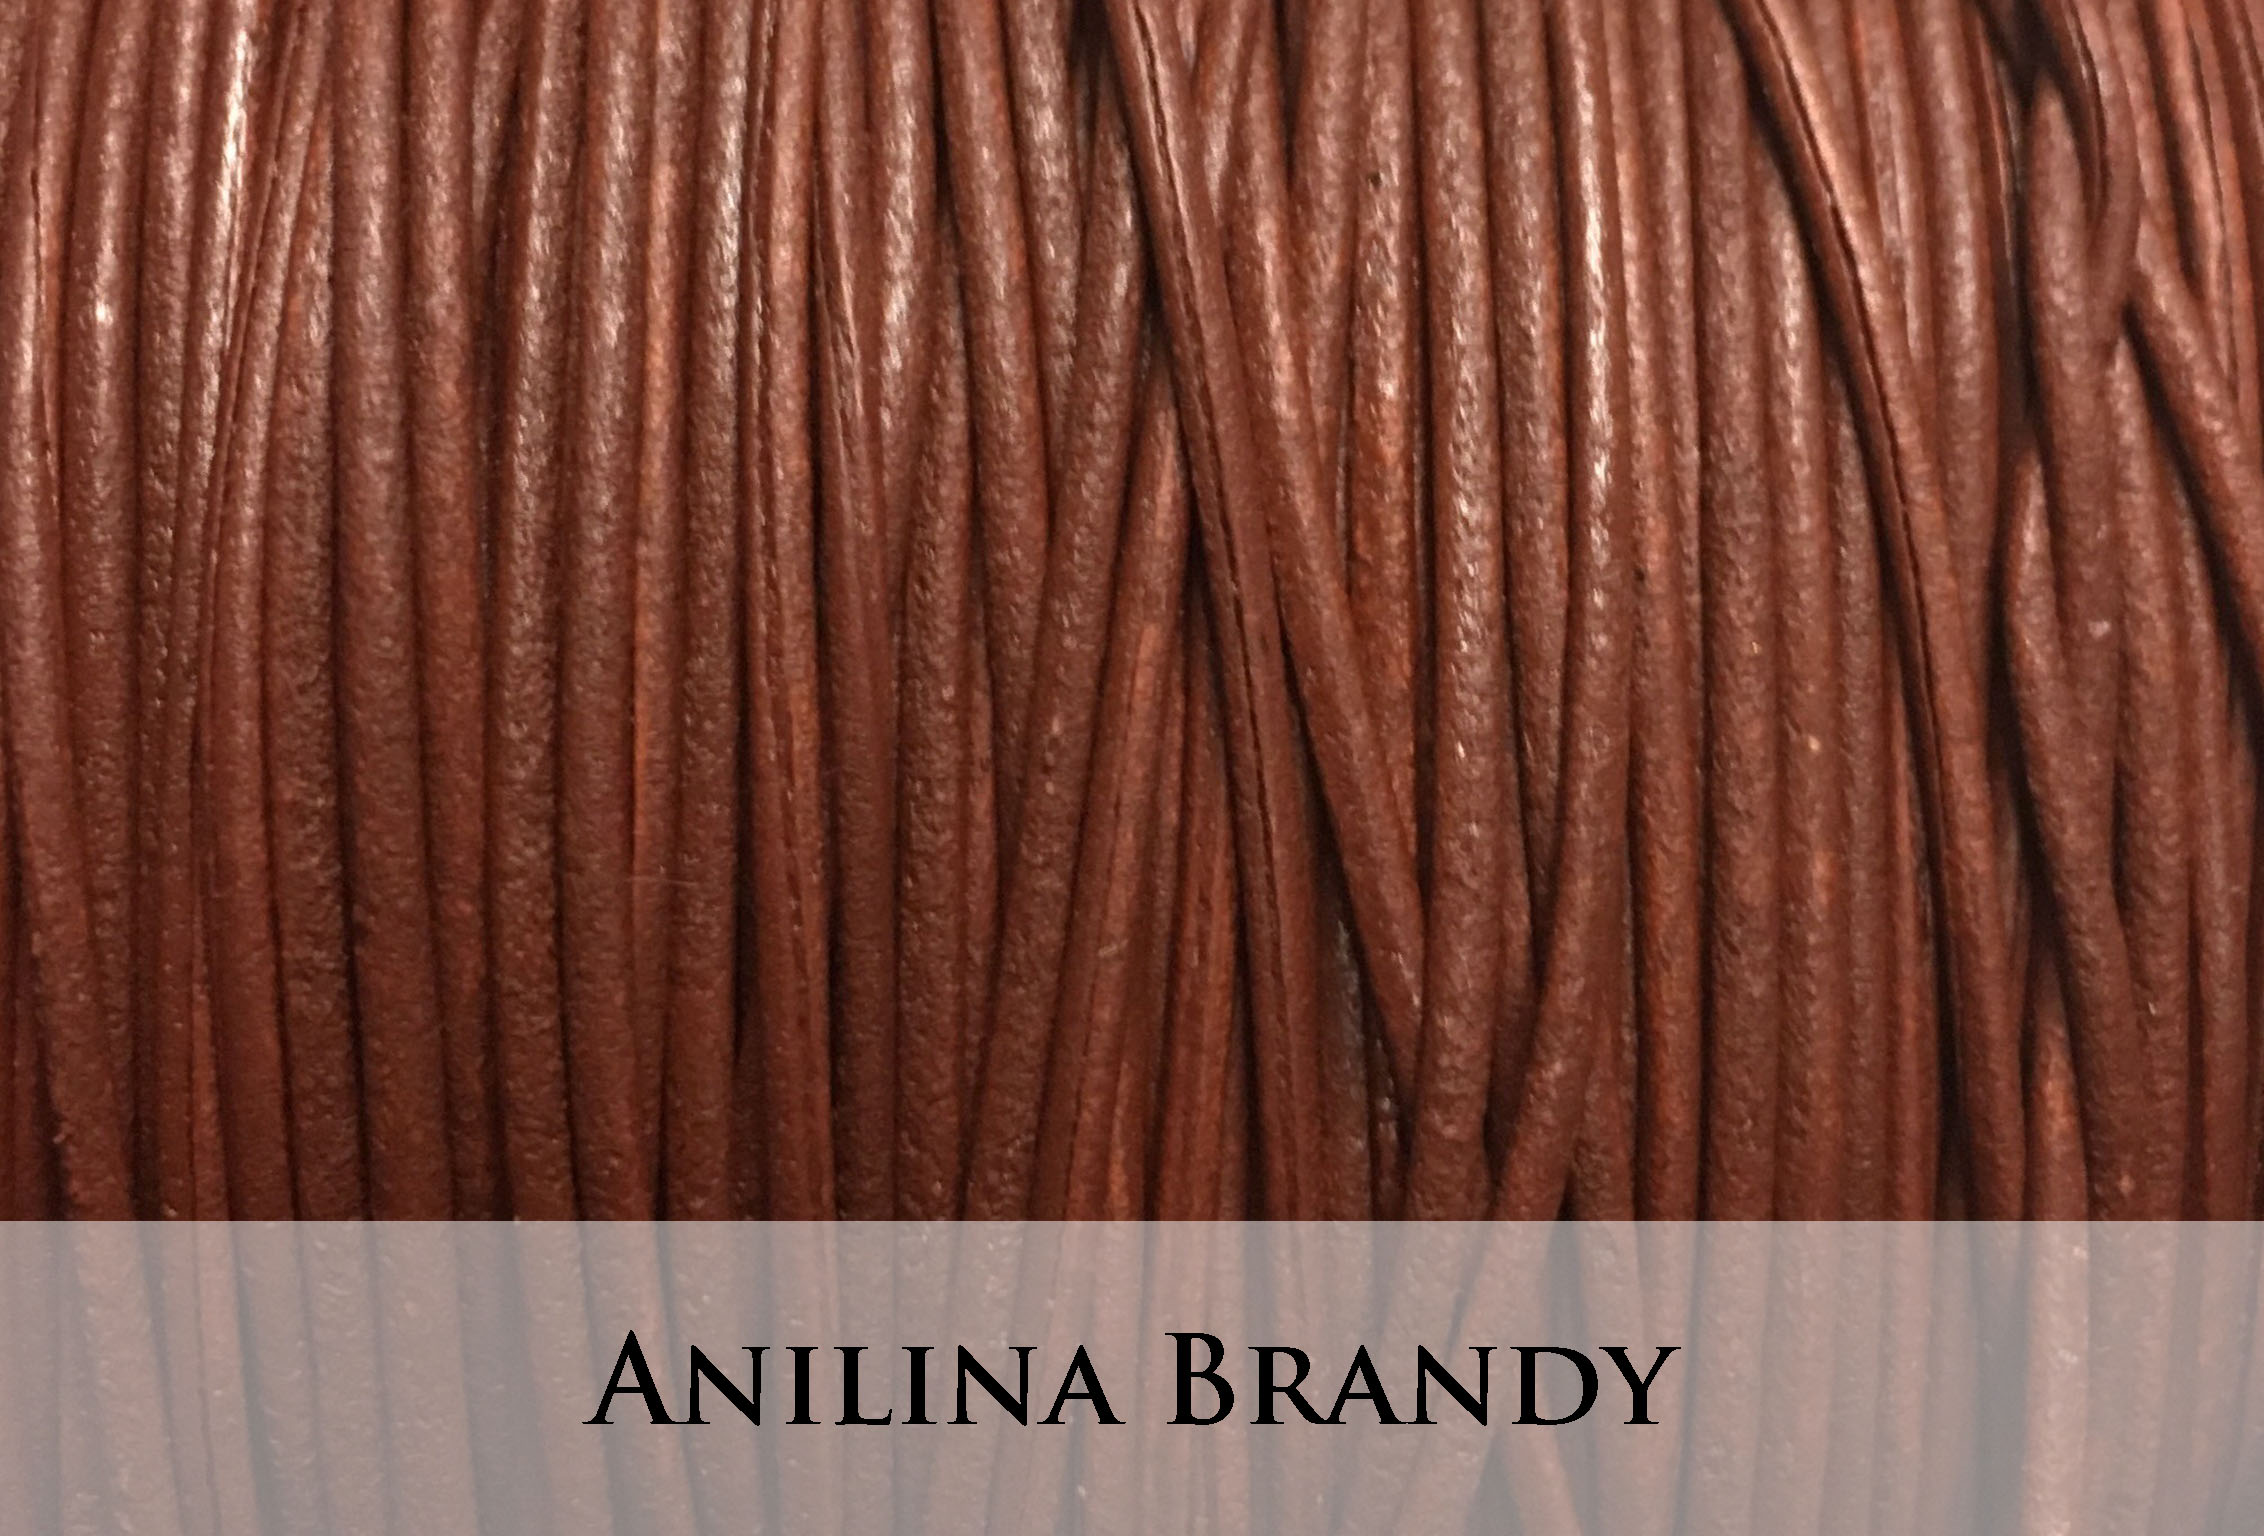 Anilina Brandy